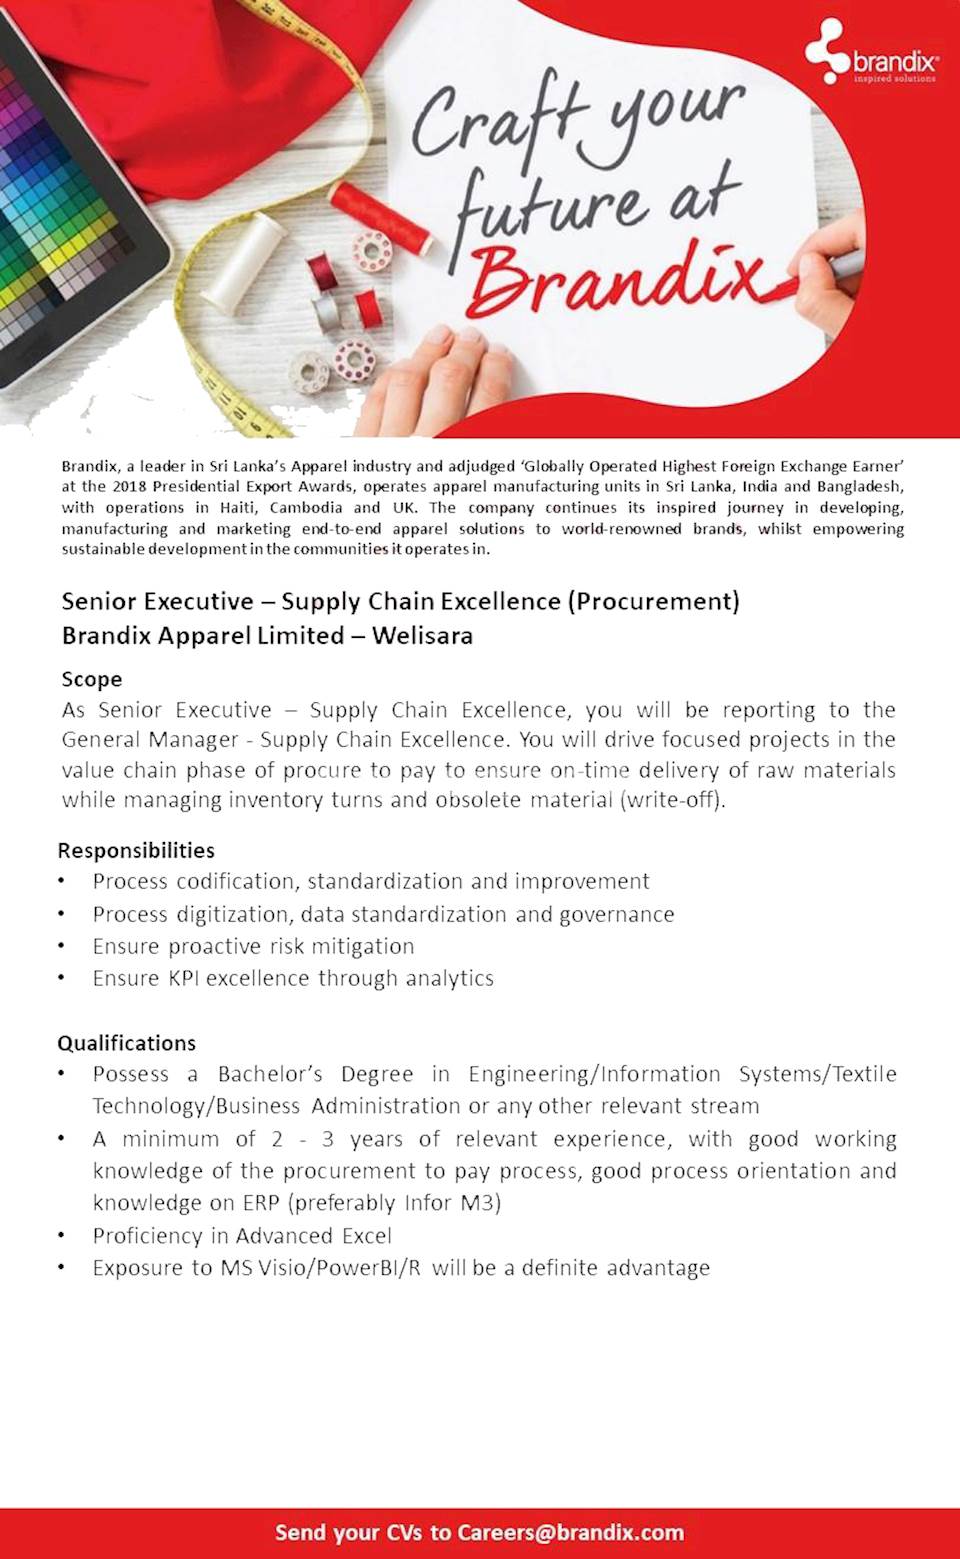 Senior Executive - Supply Chain Excellence (Procurement)